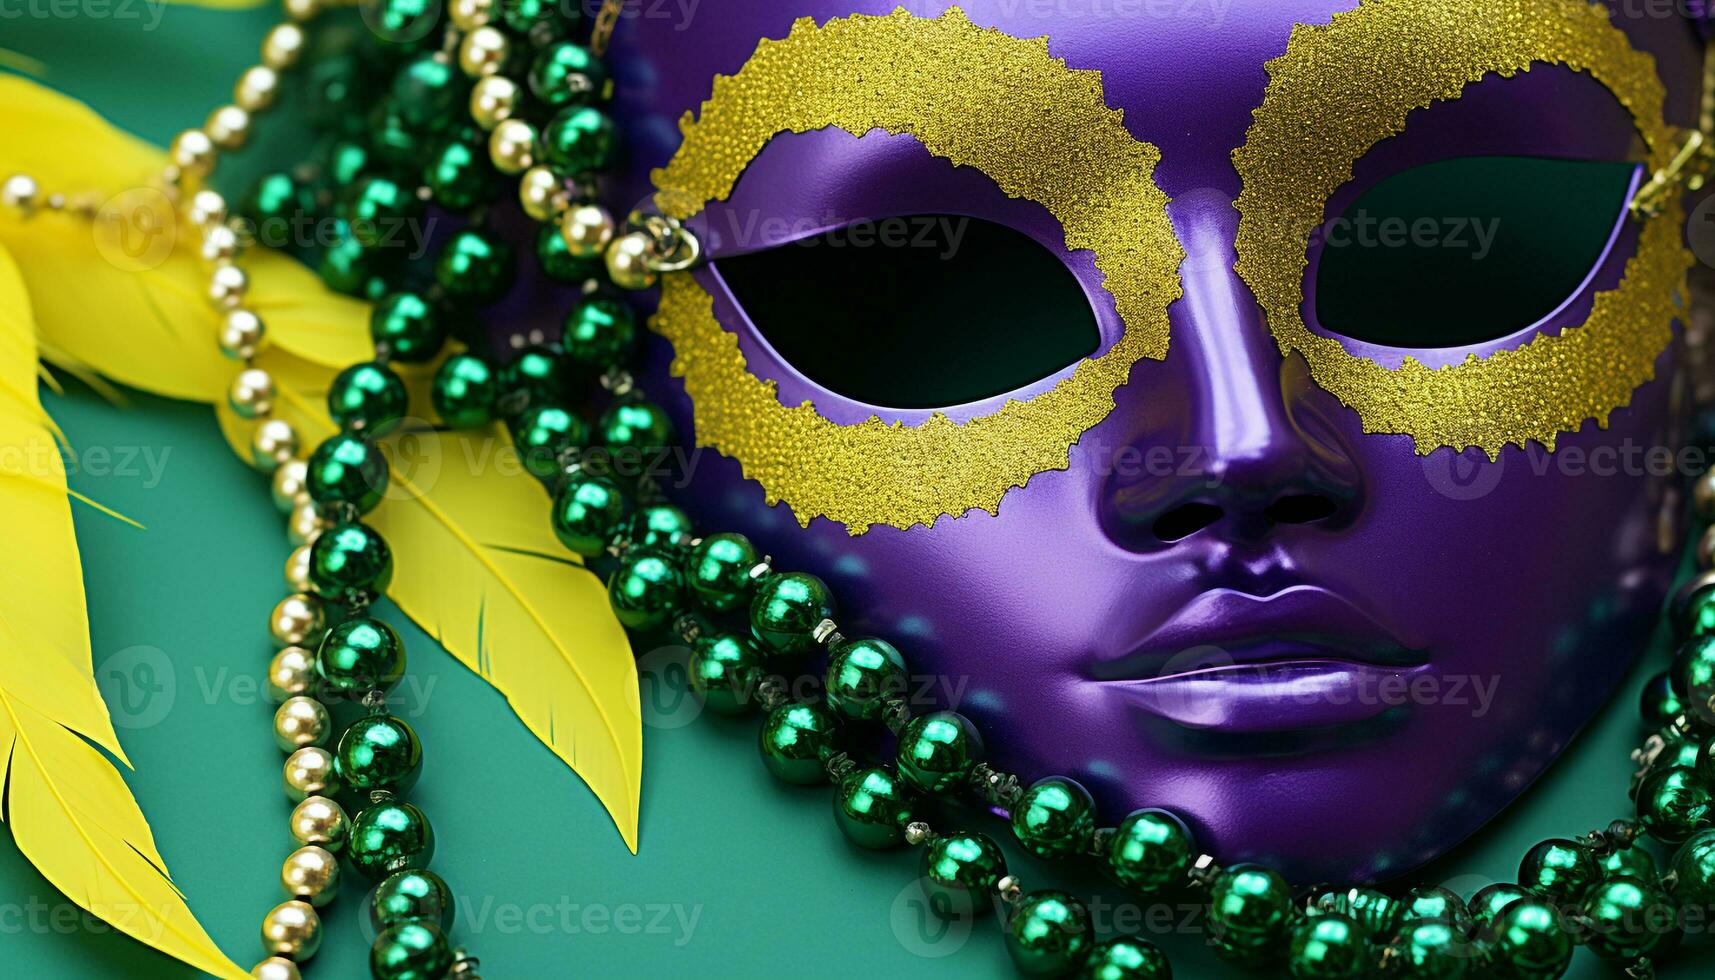 AI generated Masked beauty shines at Mardi Gras celebration generated by AI photo